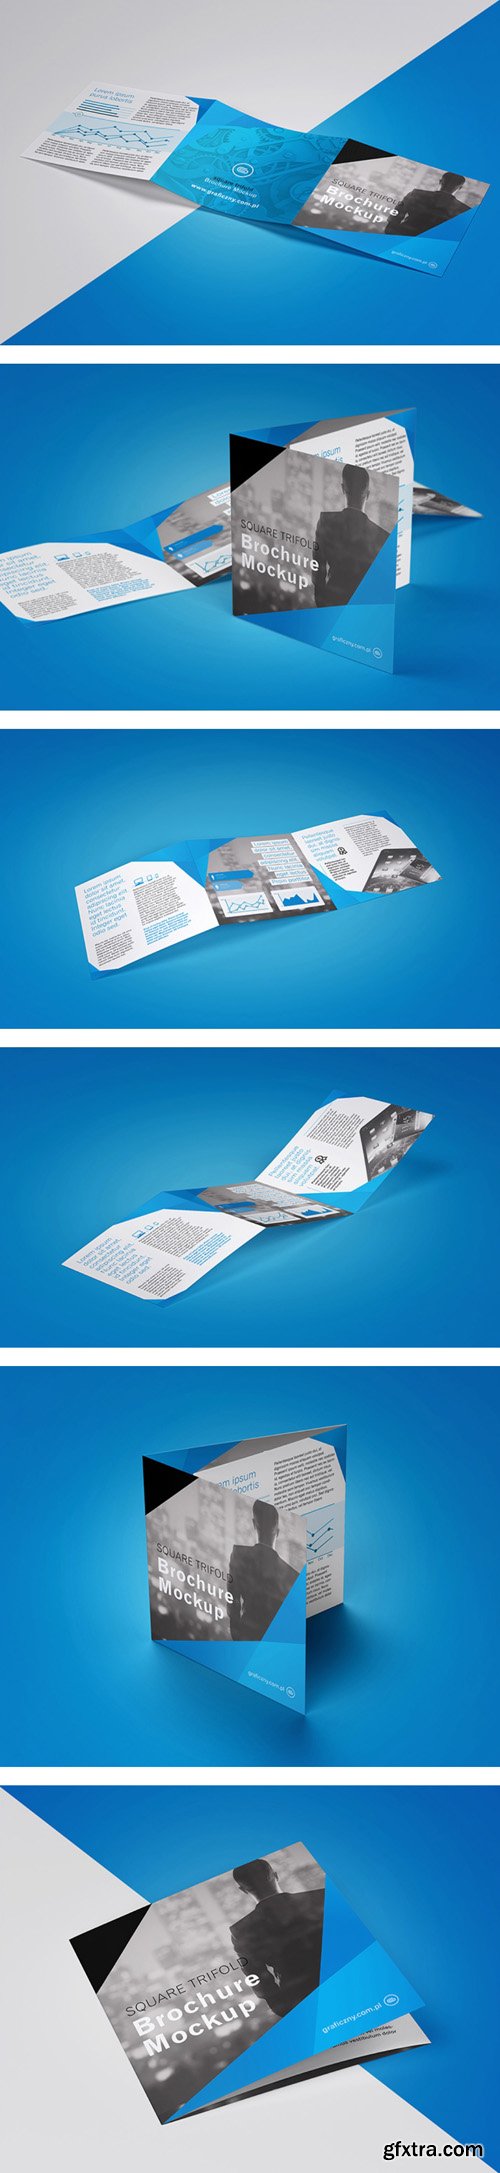 Square Trifold Brochure - PSD Mockup Templates